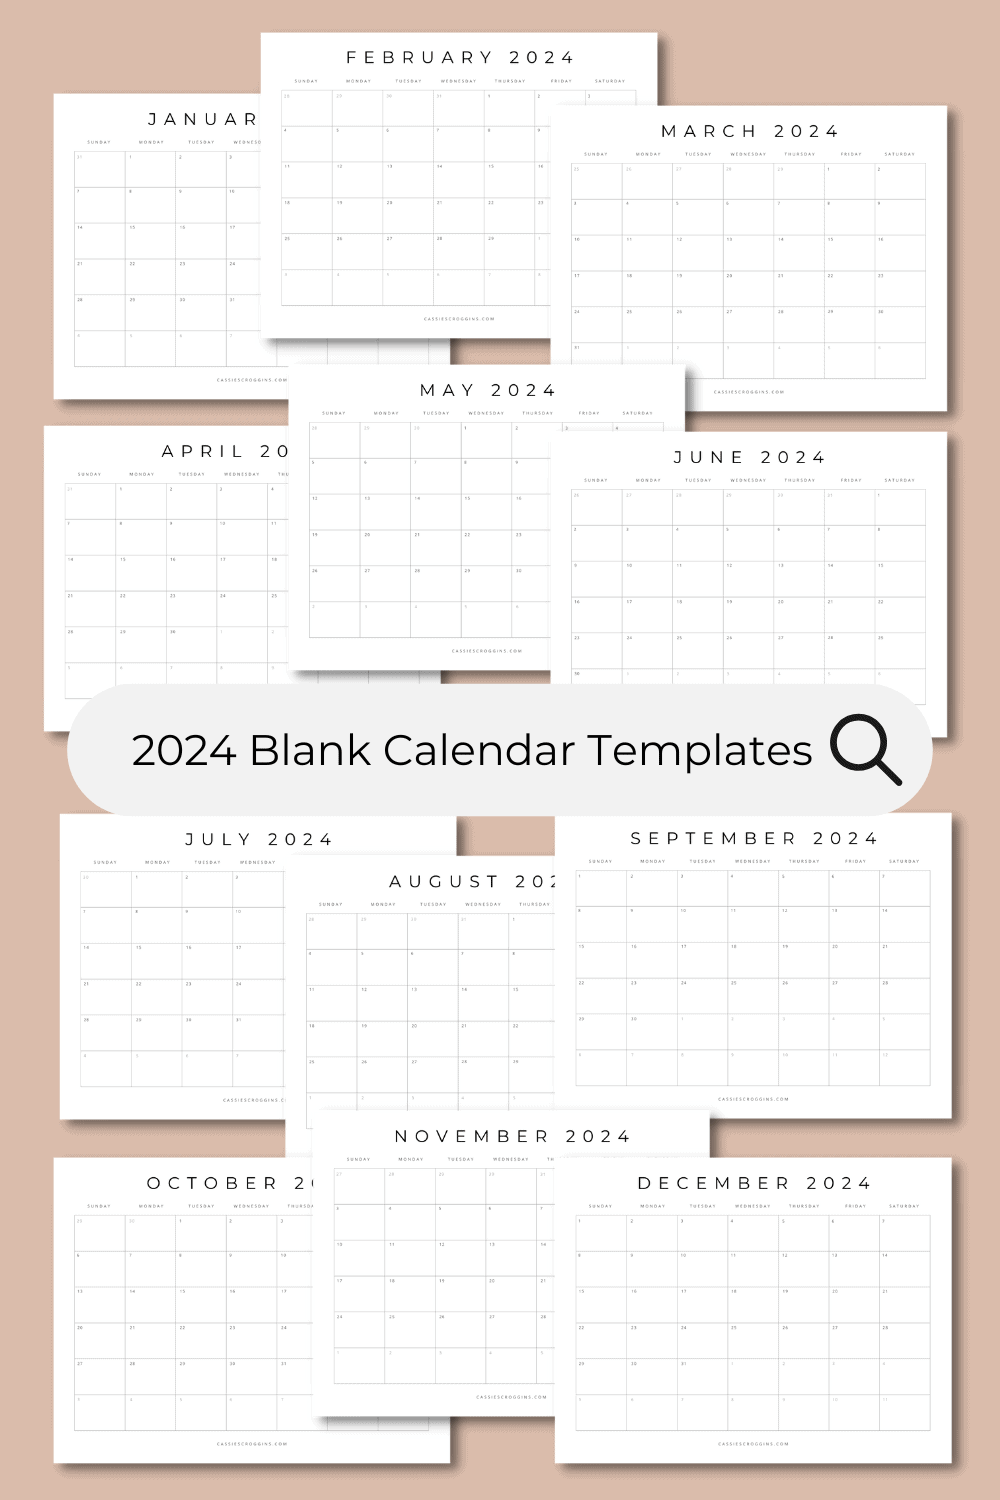 Free Printable 2024 Blank Calendar Templates (All 12 Months) with Free Printable Blank Calendar Templates 2024